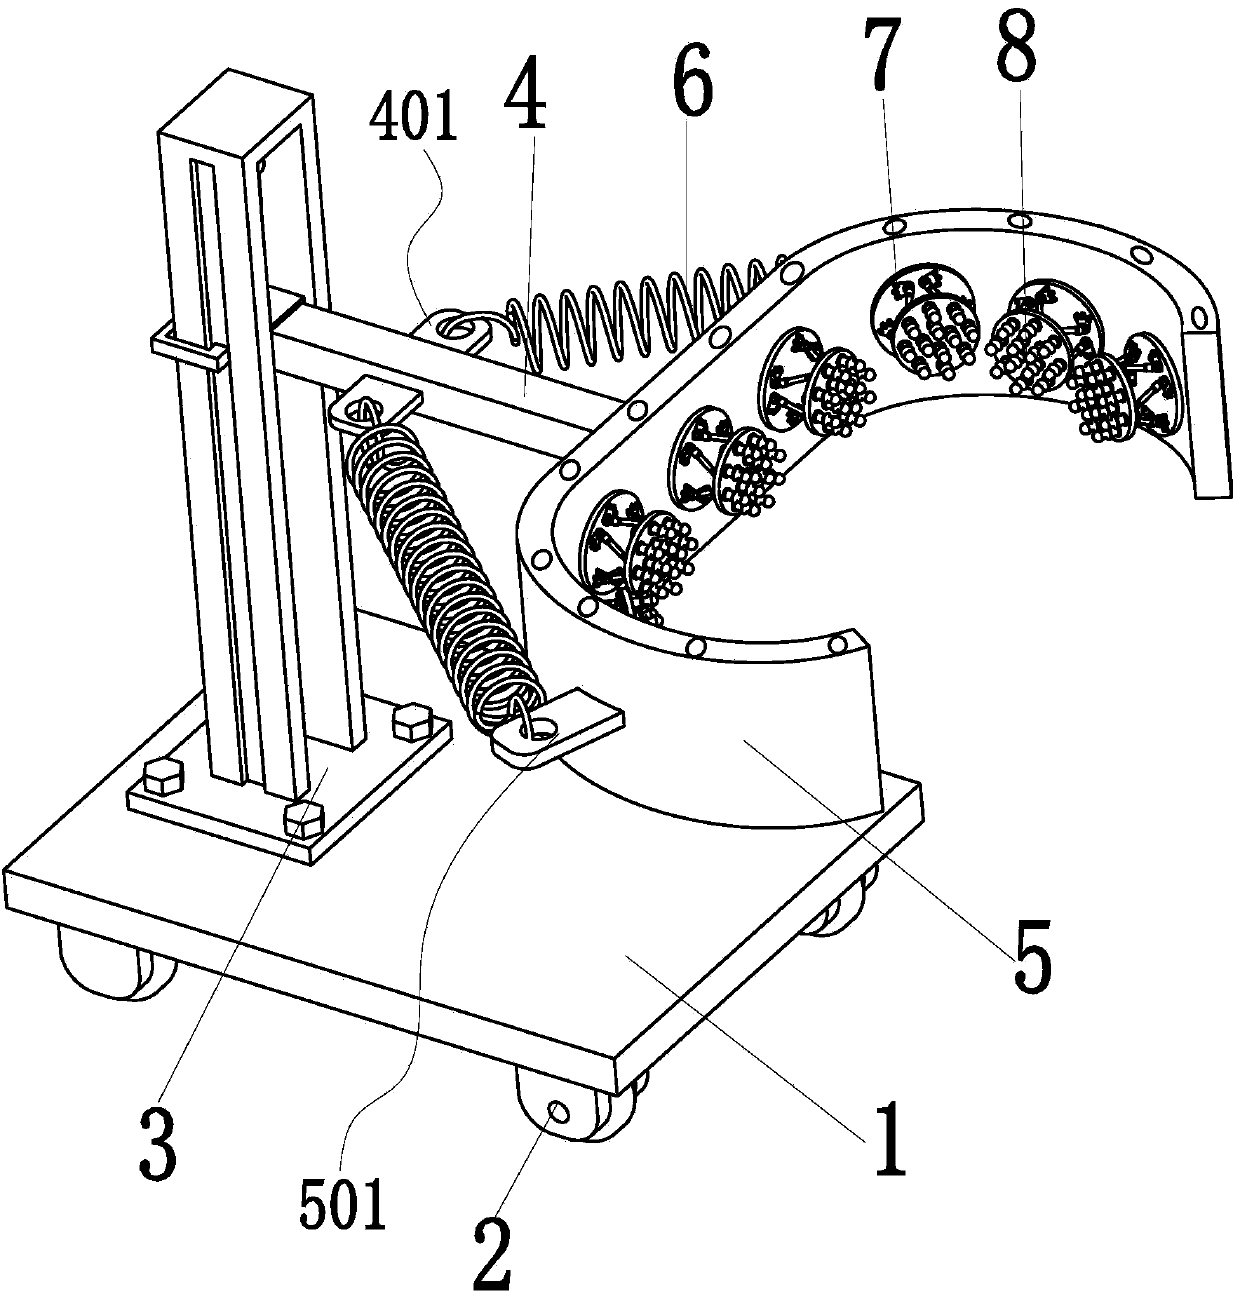 Cervical vertebra massage robot based on Stewart parallel mechanisms